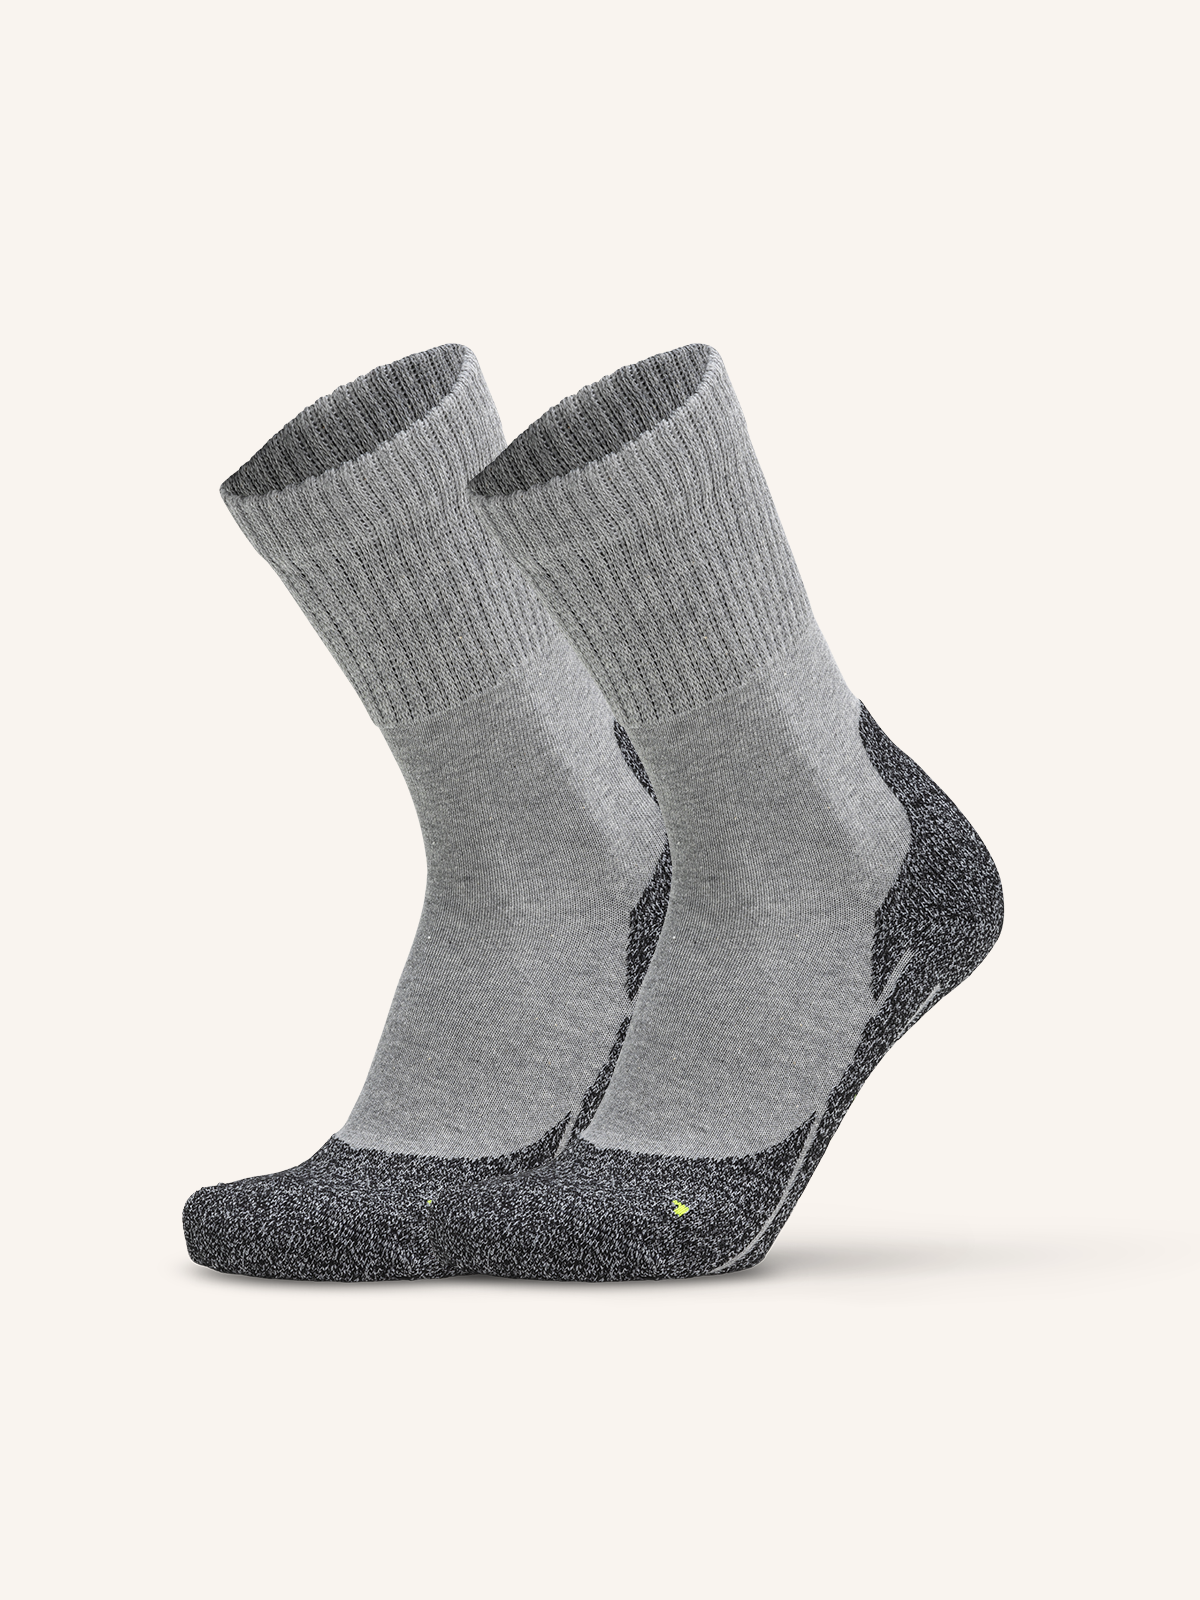 Long Cotton Socks for Men for Trekking | Plain Color | Pack of 2 Pairs | PRS PRO 04